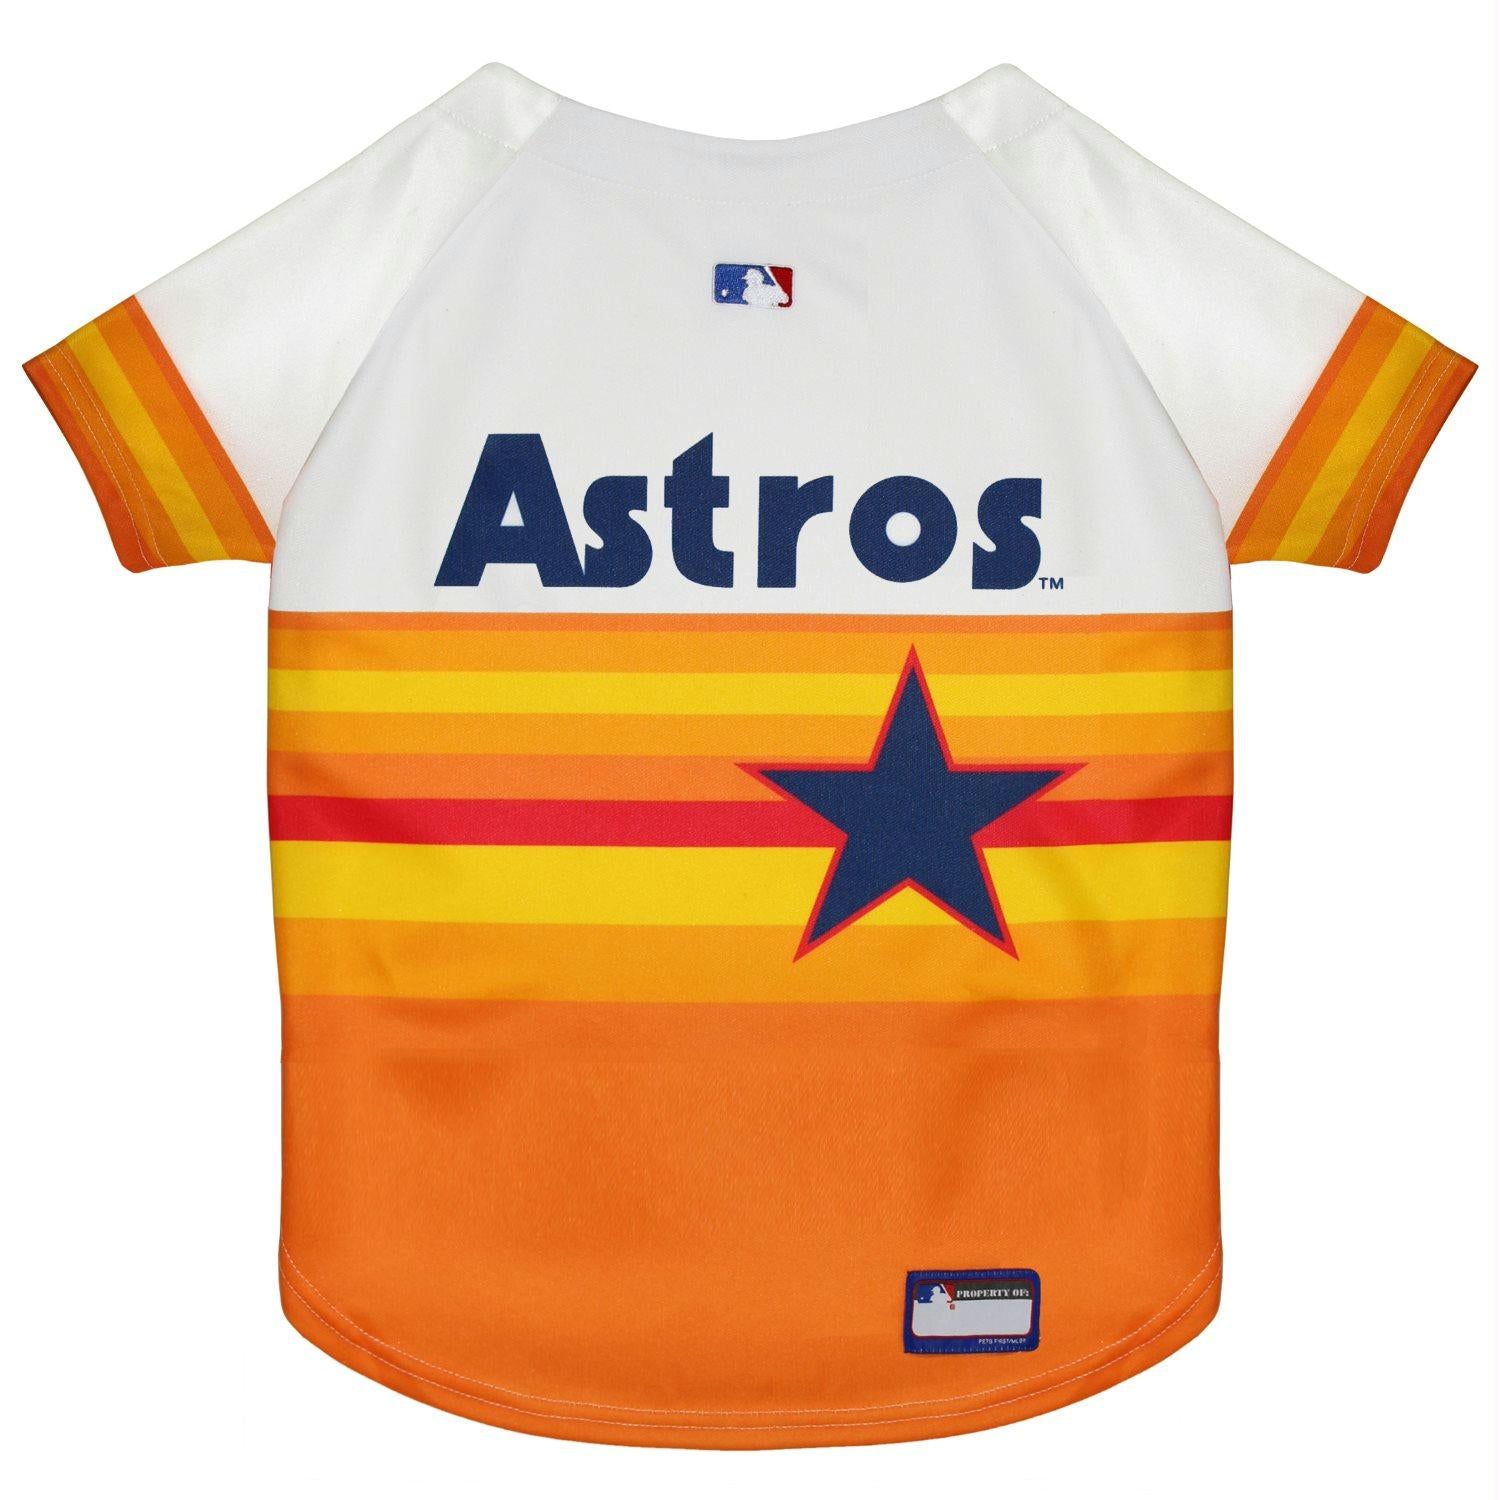 Houston "Astros" Retro NL Eagles Baseball Jersey by